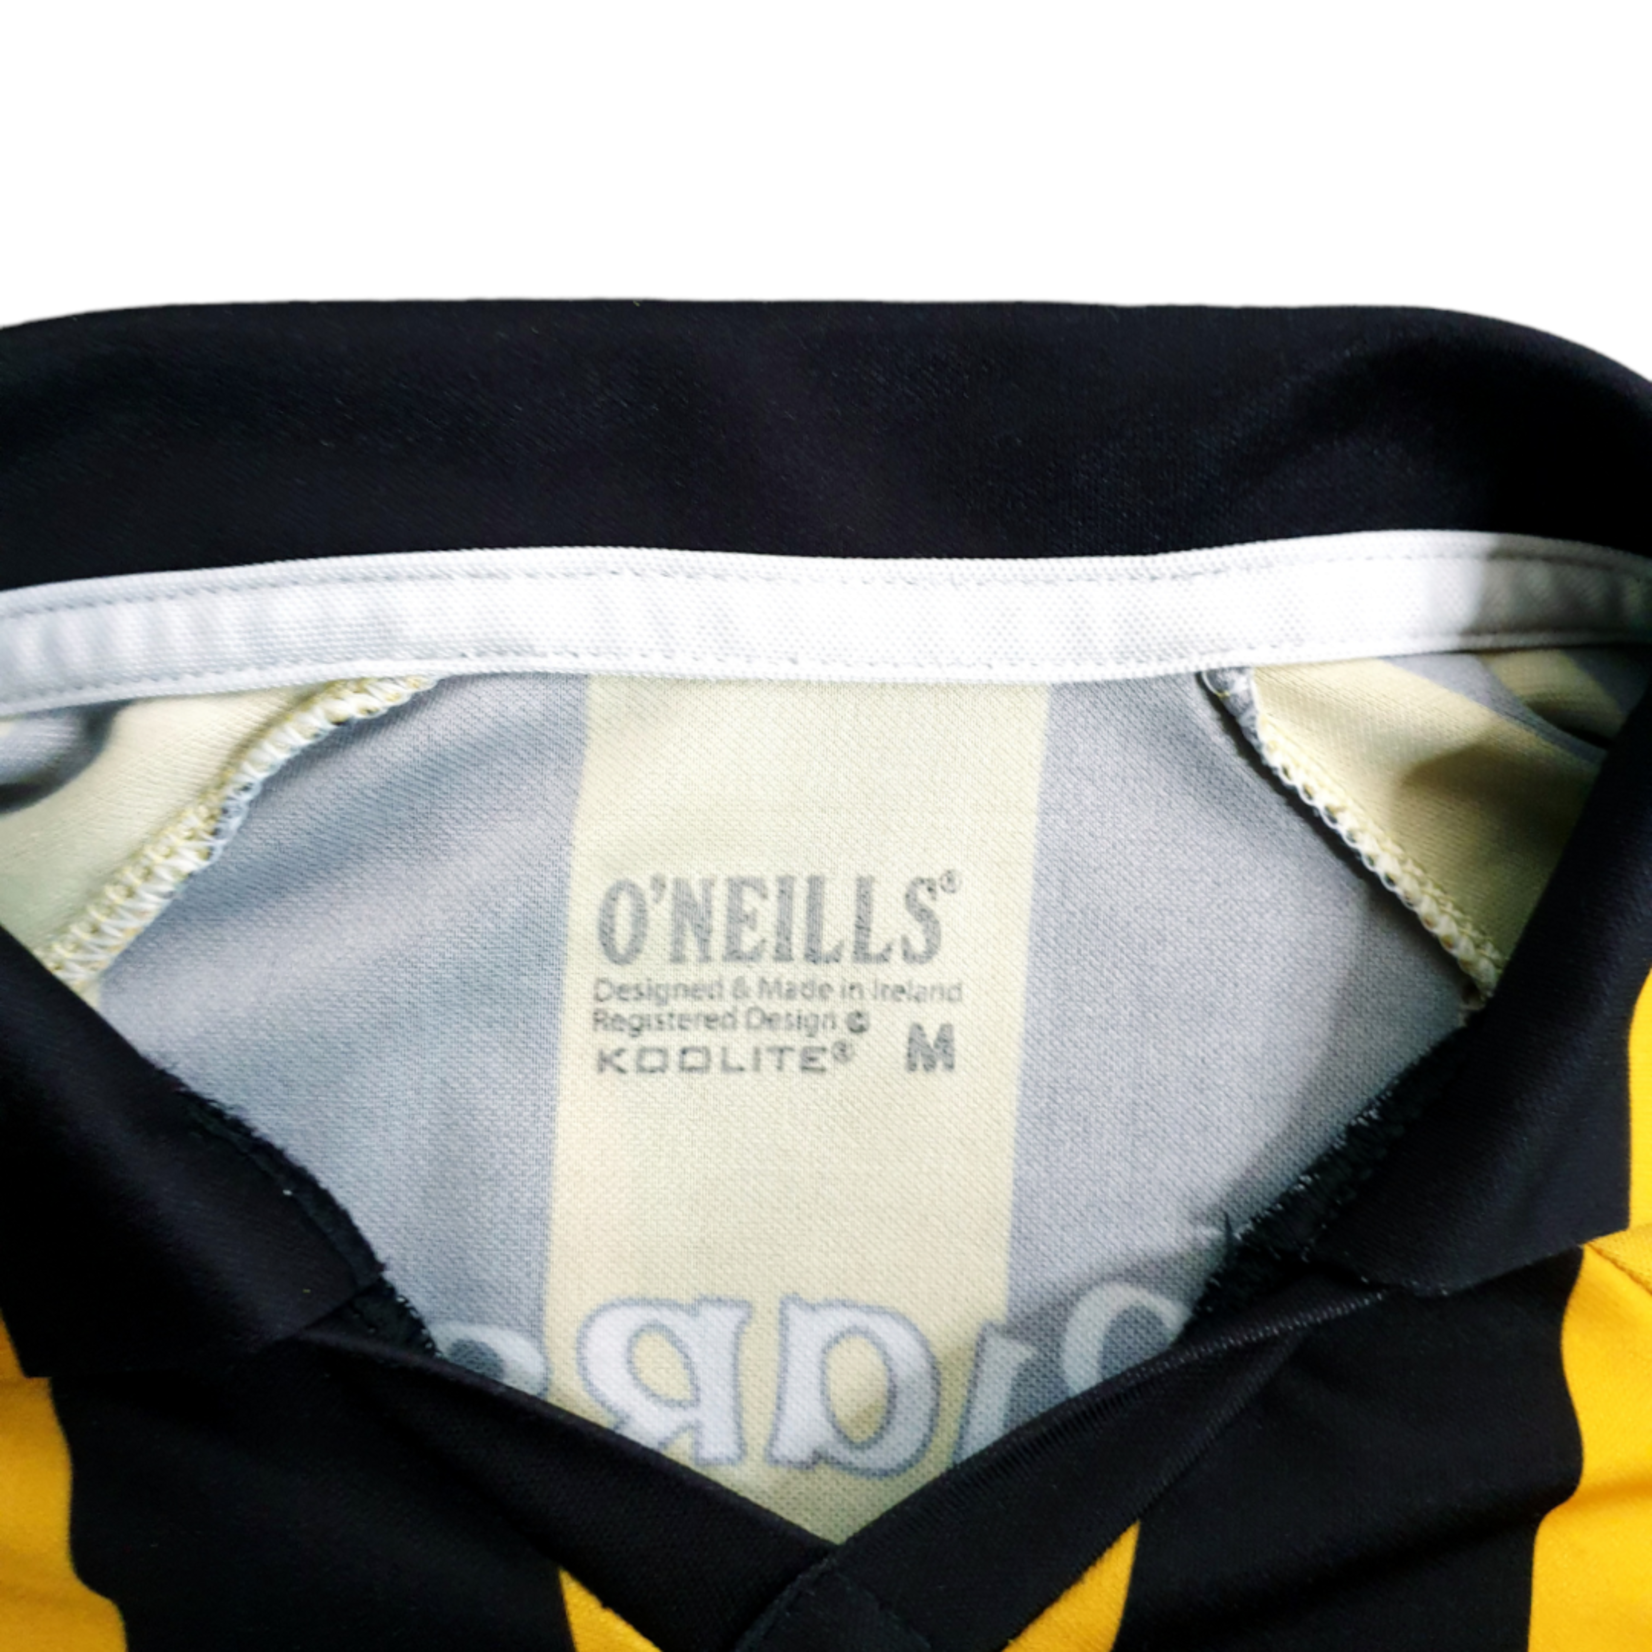 O'Neills Origineel O'Neills vintage GAA shirt Na Piarsaigh GAA